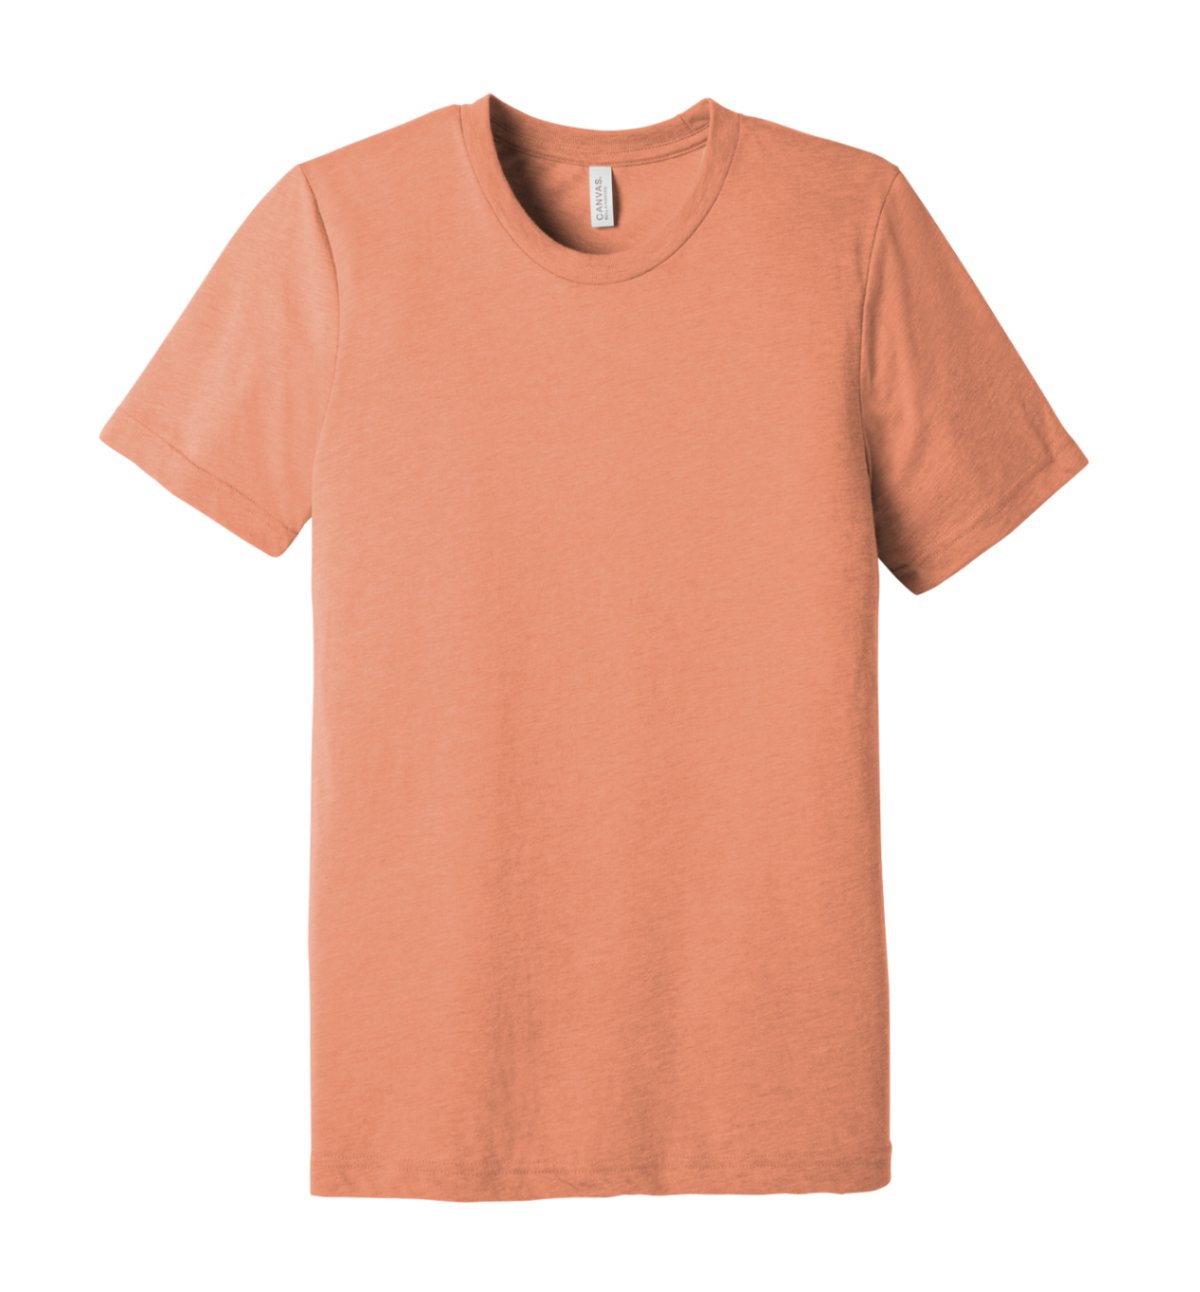 https://bulkcustomshirts.com/wp-content/uploads/2019/02/Bella-Canvas-Unisex-Triblend-Short-Sleeve-T-Shirt-Bulk-Custom-Shirts.jpg